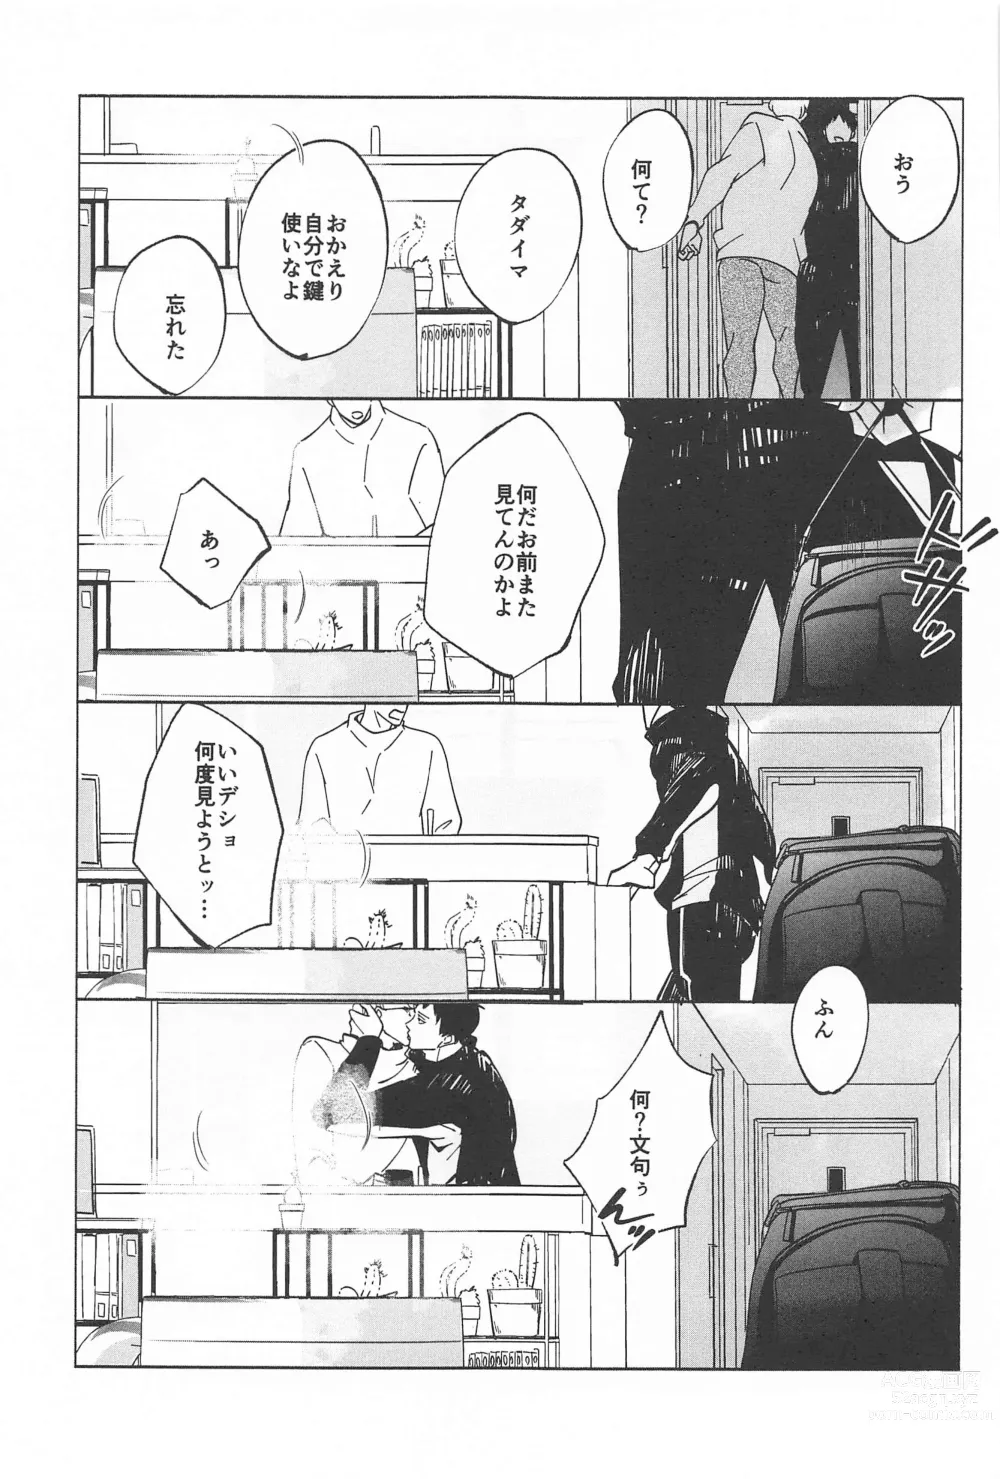 Page 35 of doujinshi Ketsui no Katachi